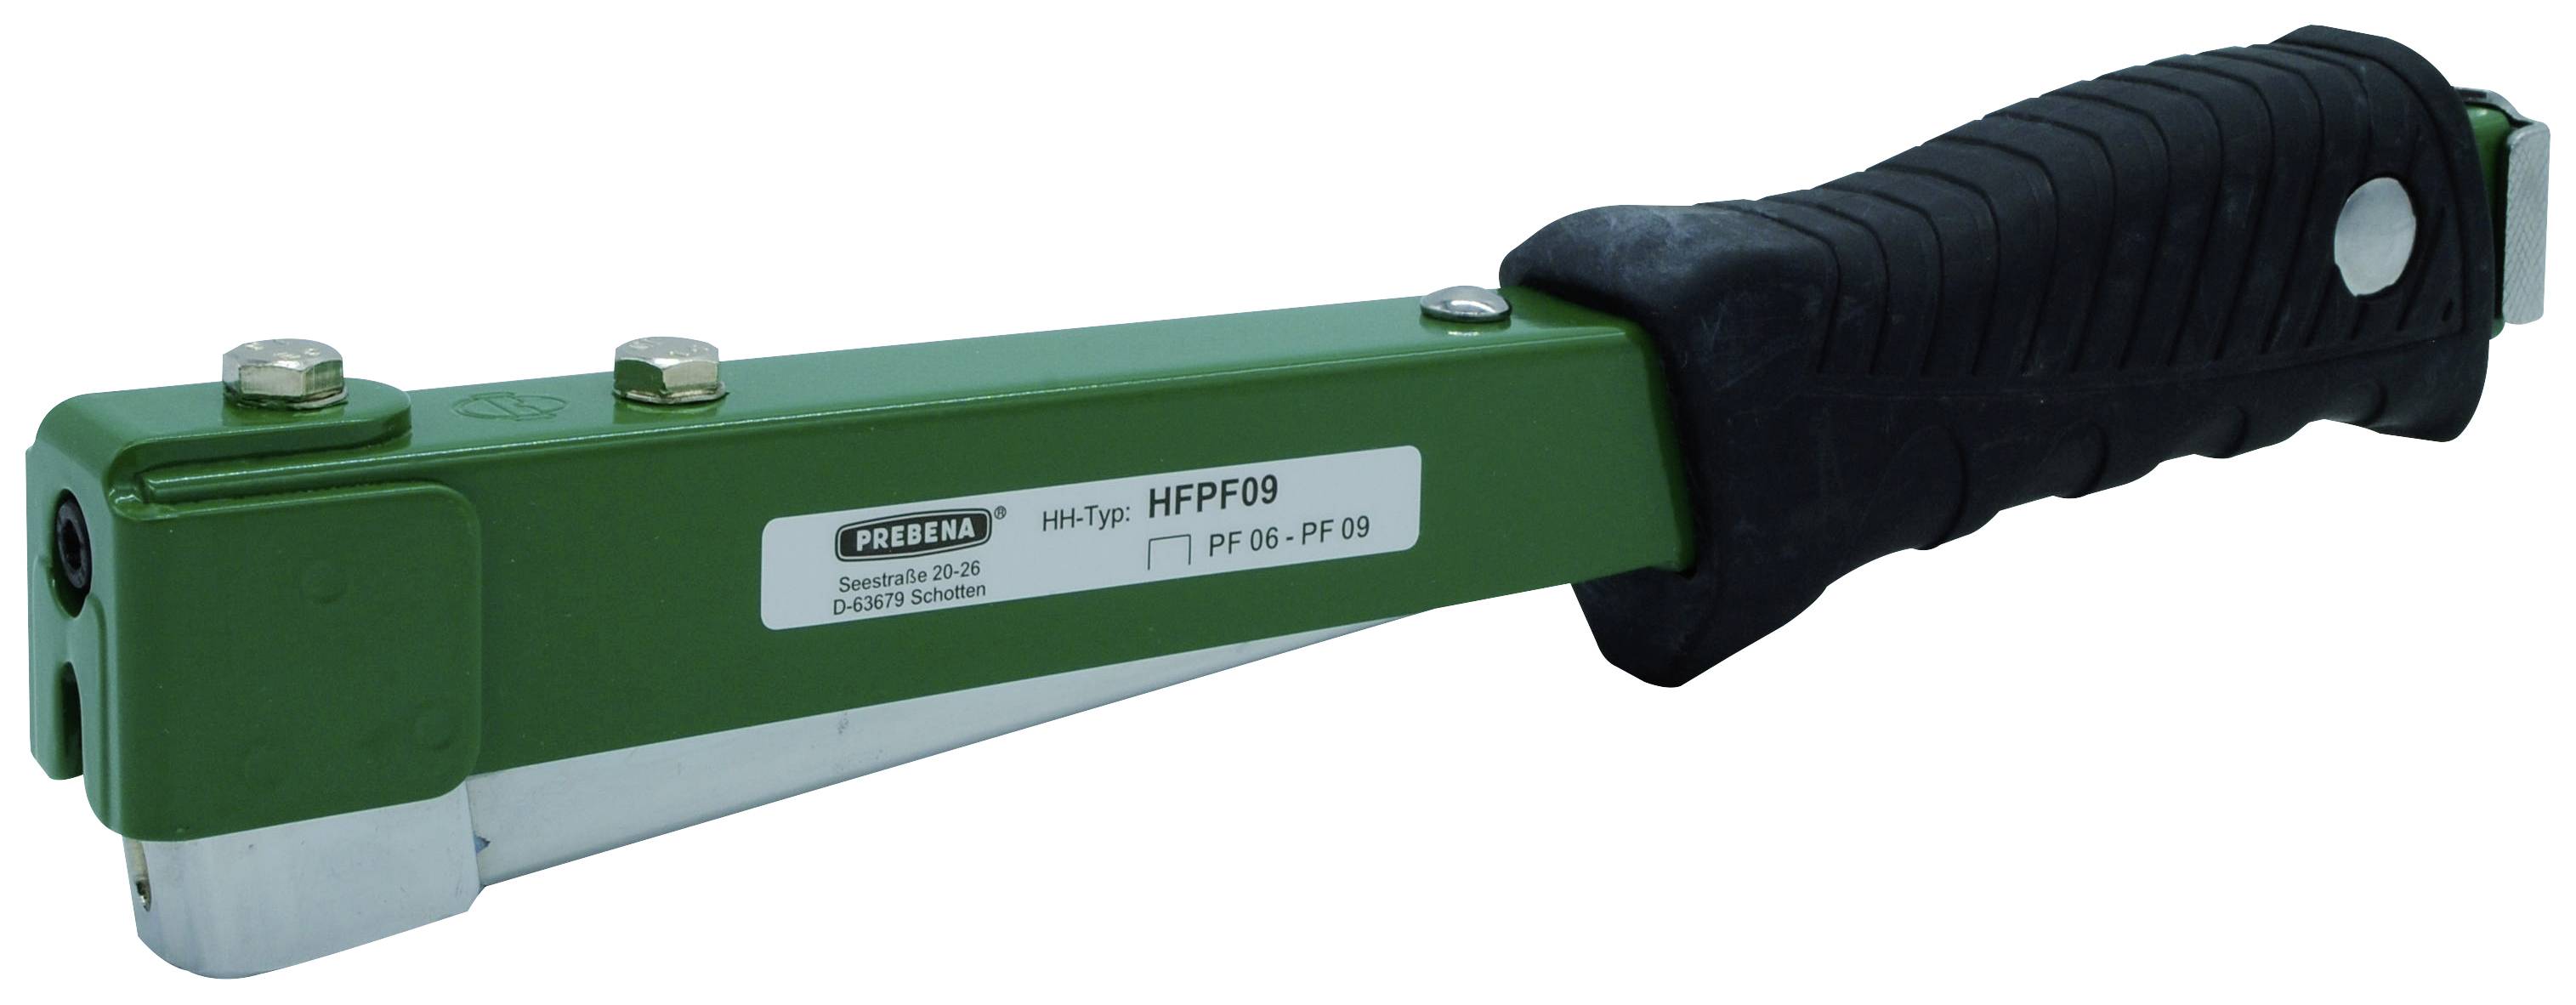 PREBENA HFPF09 Handtacker